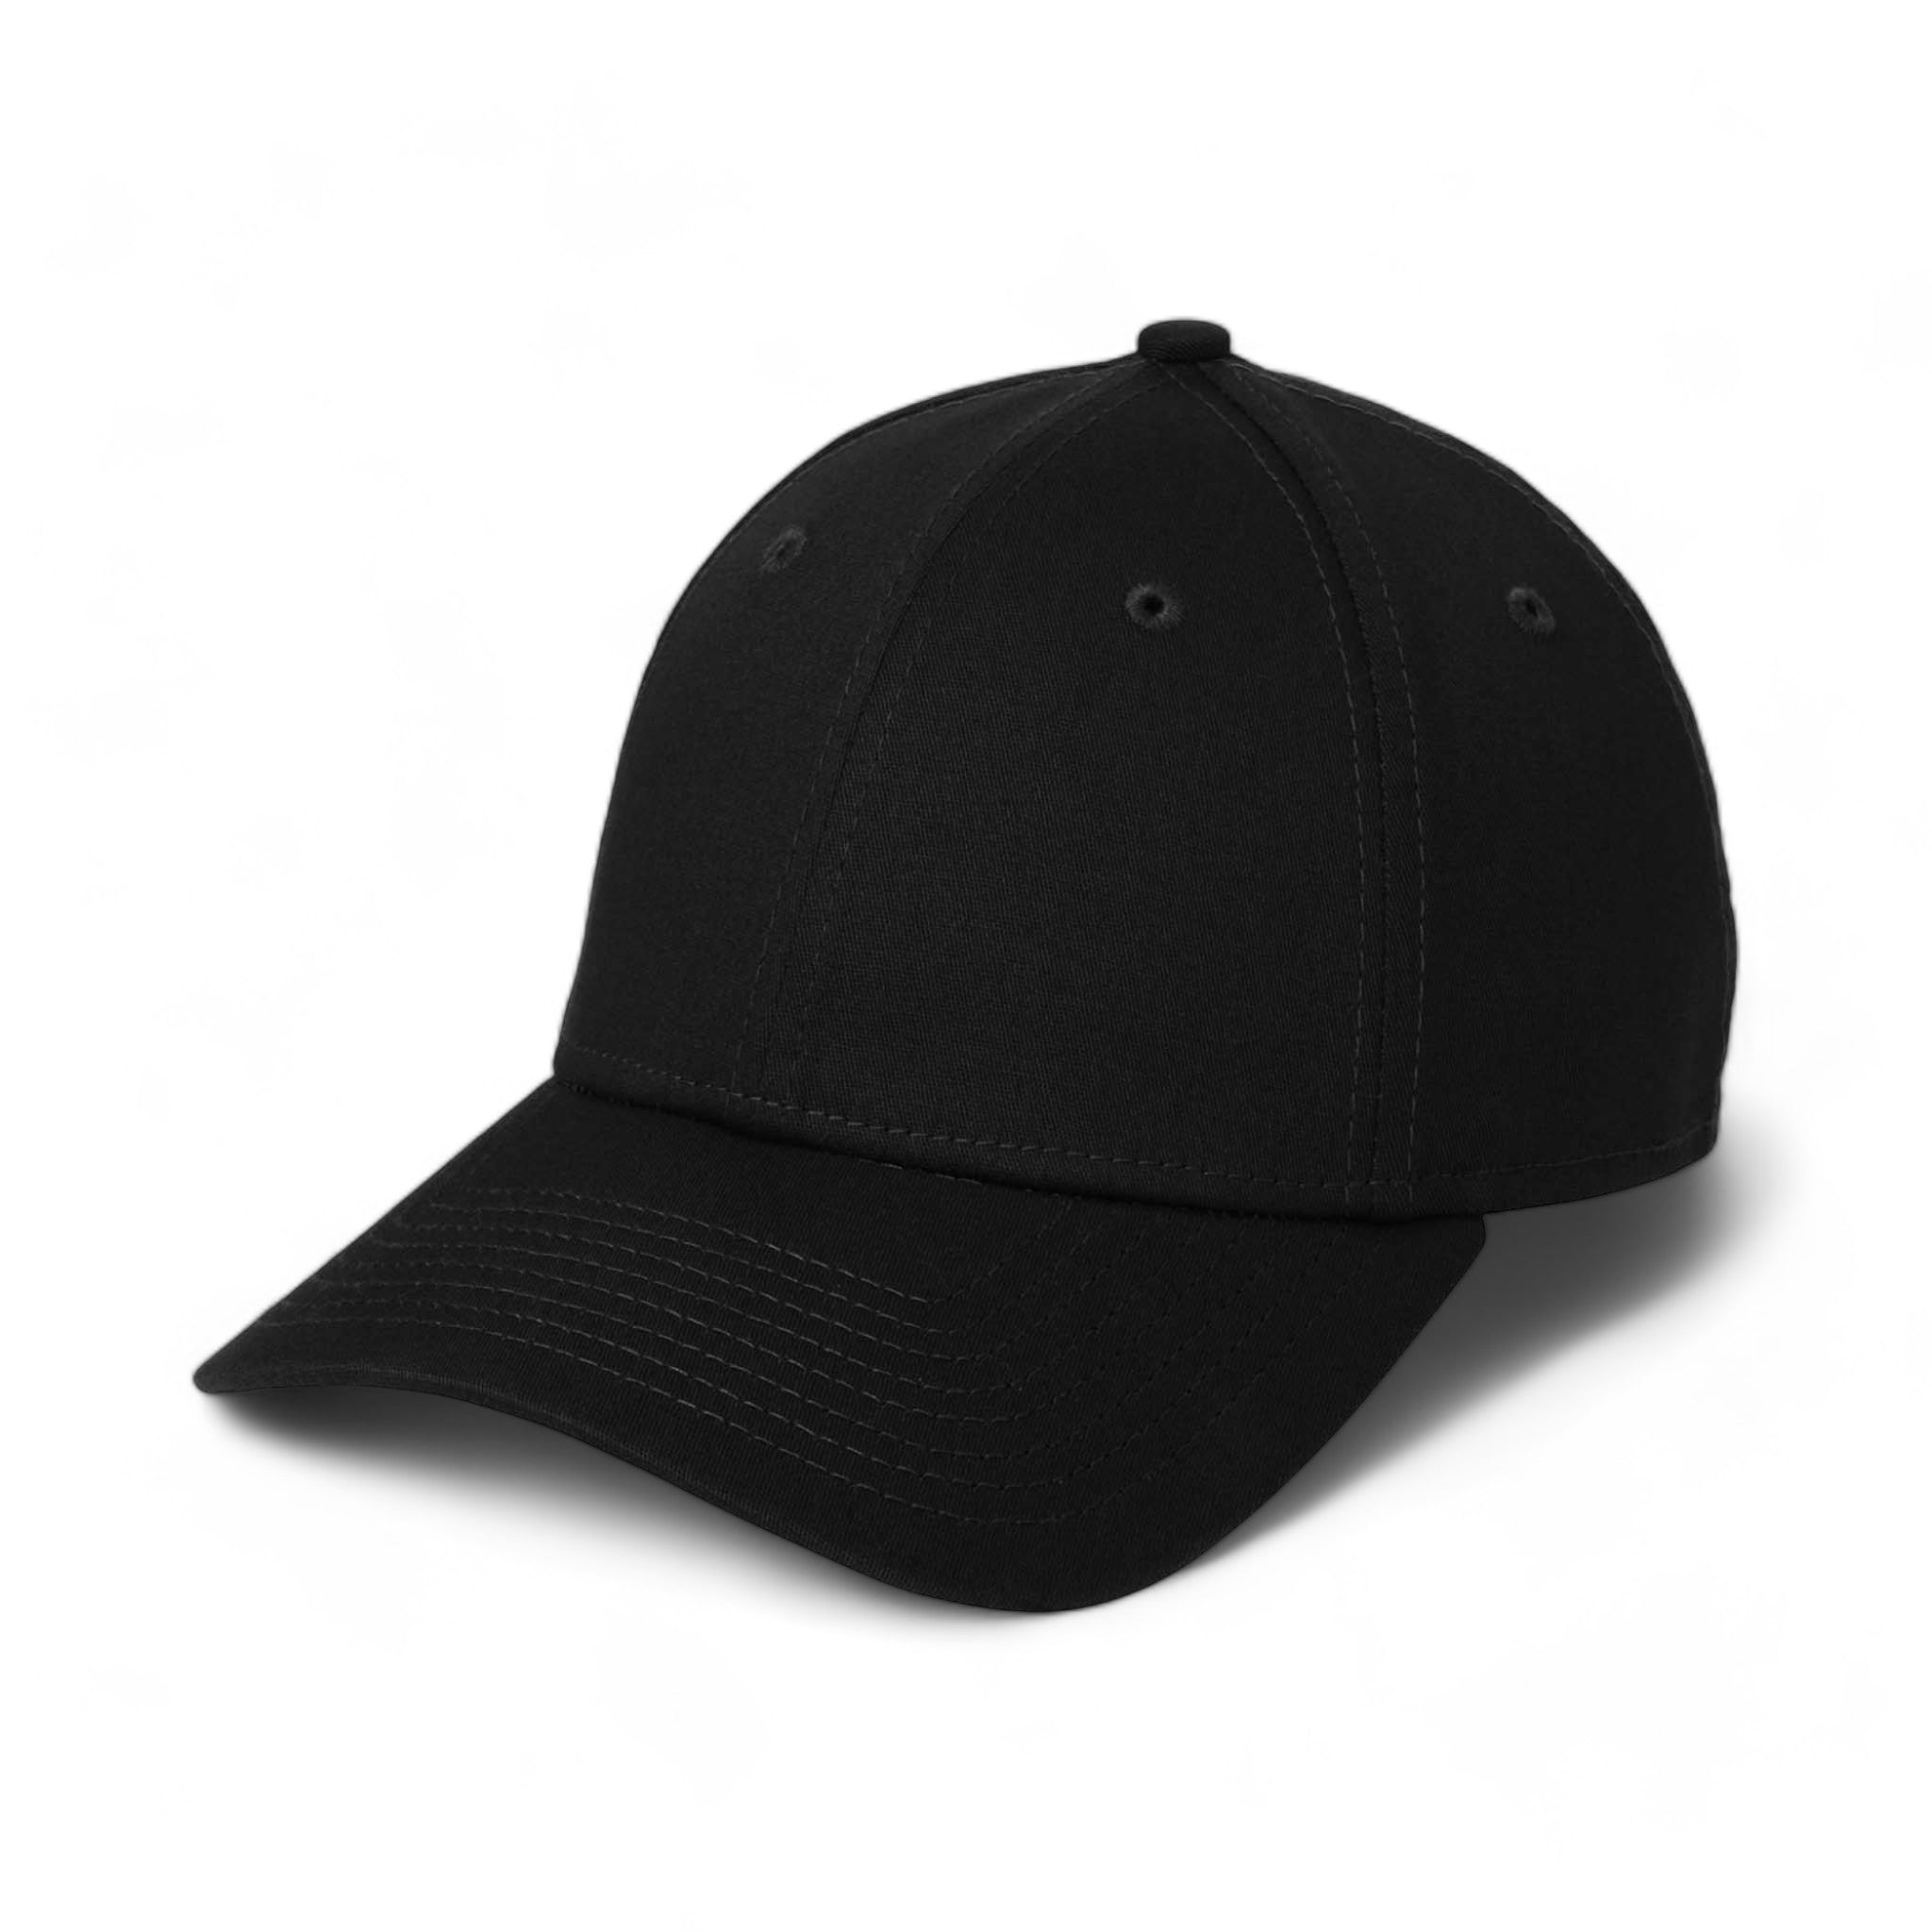 Side view of New Era NE1000 custom hat in black